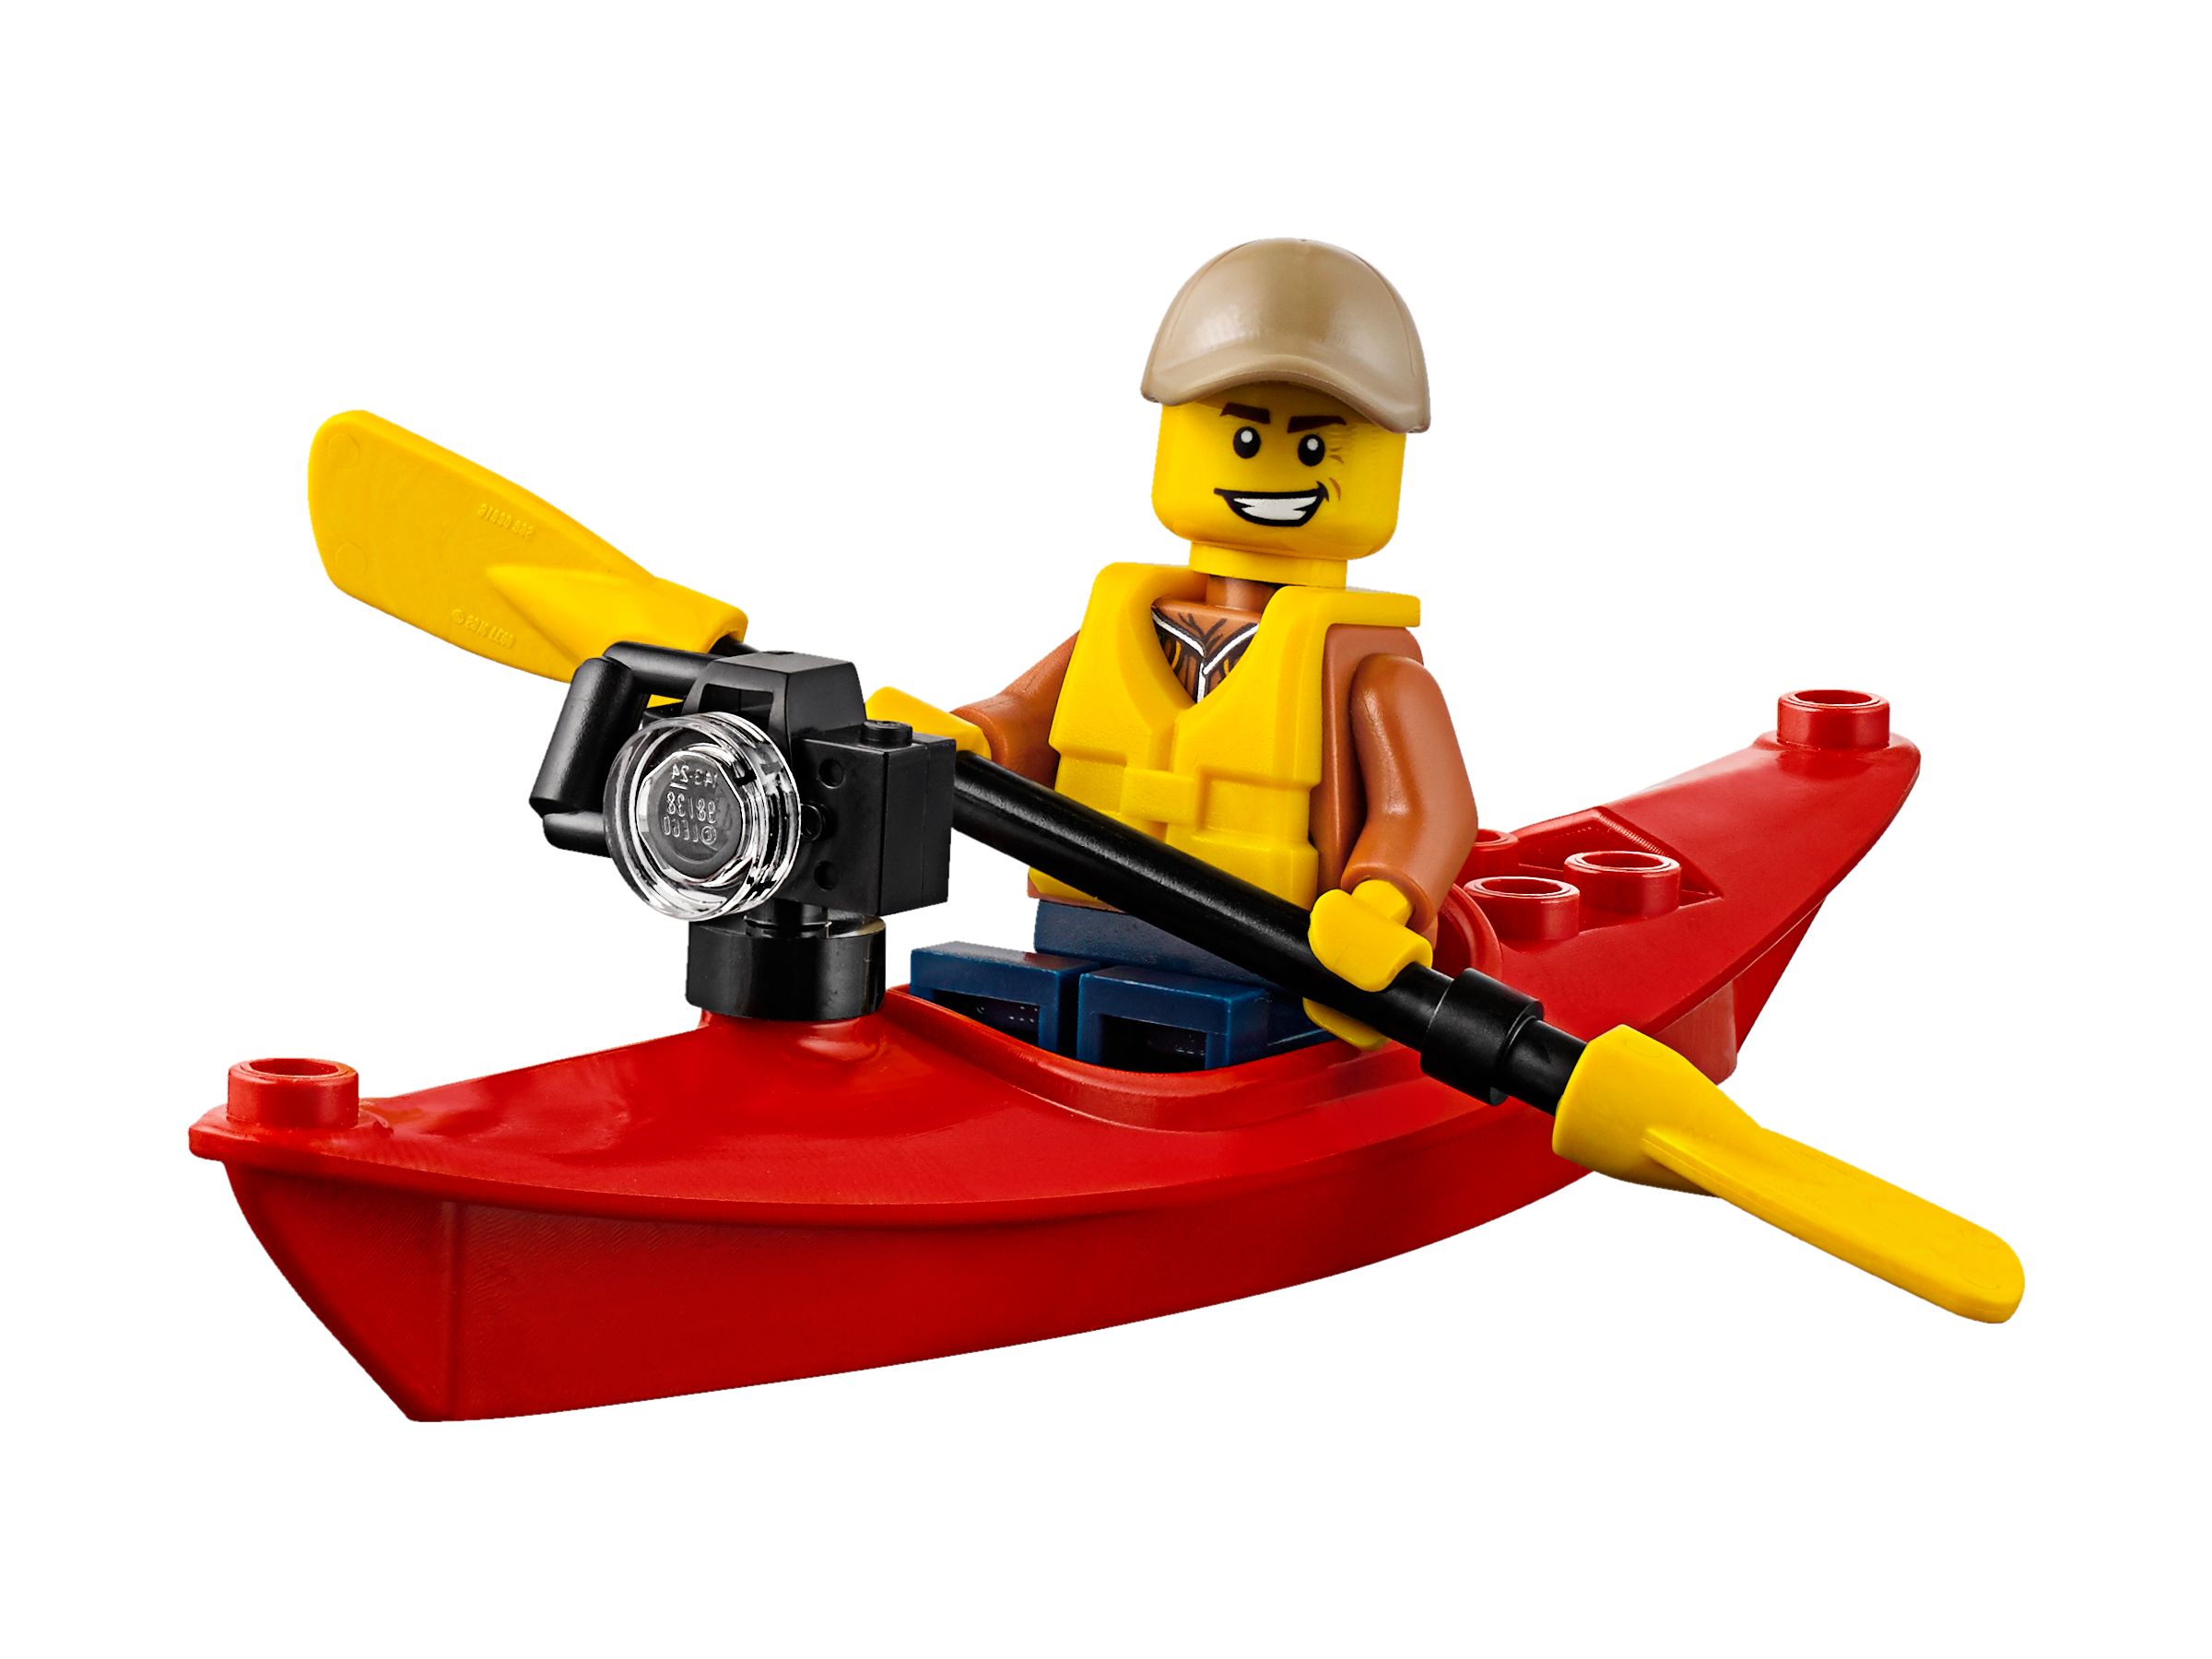 LEGO City 60160 Mobiles Dschungel-Labor LEGO_60160_alt9.jpg